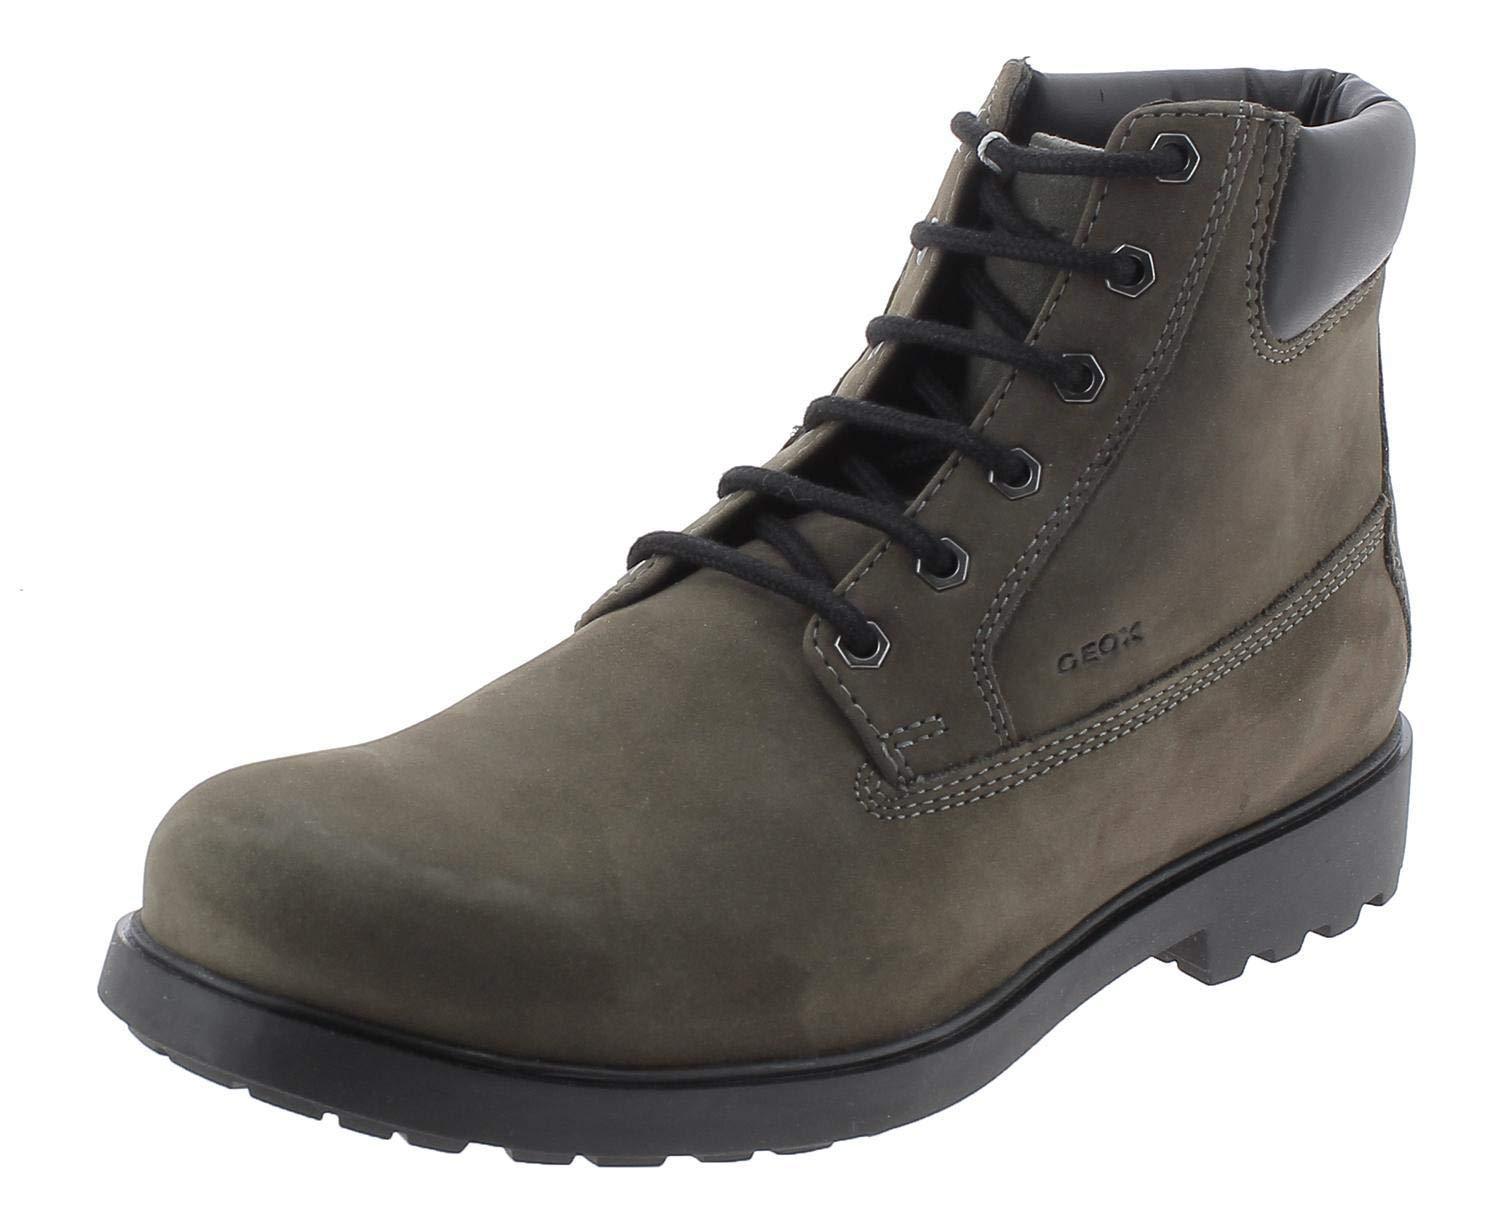 Geox U Rhadalf F Boots Gray U045hfc9002 for Men - Lyst